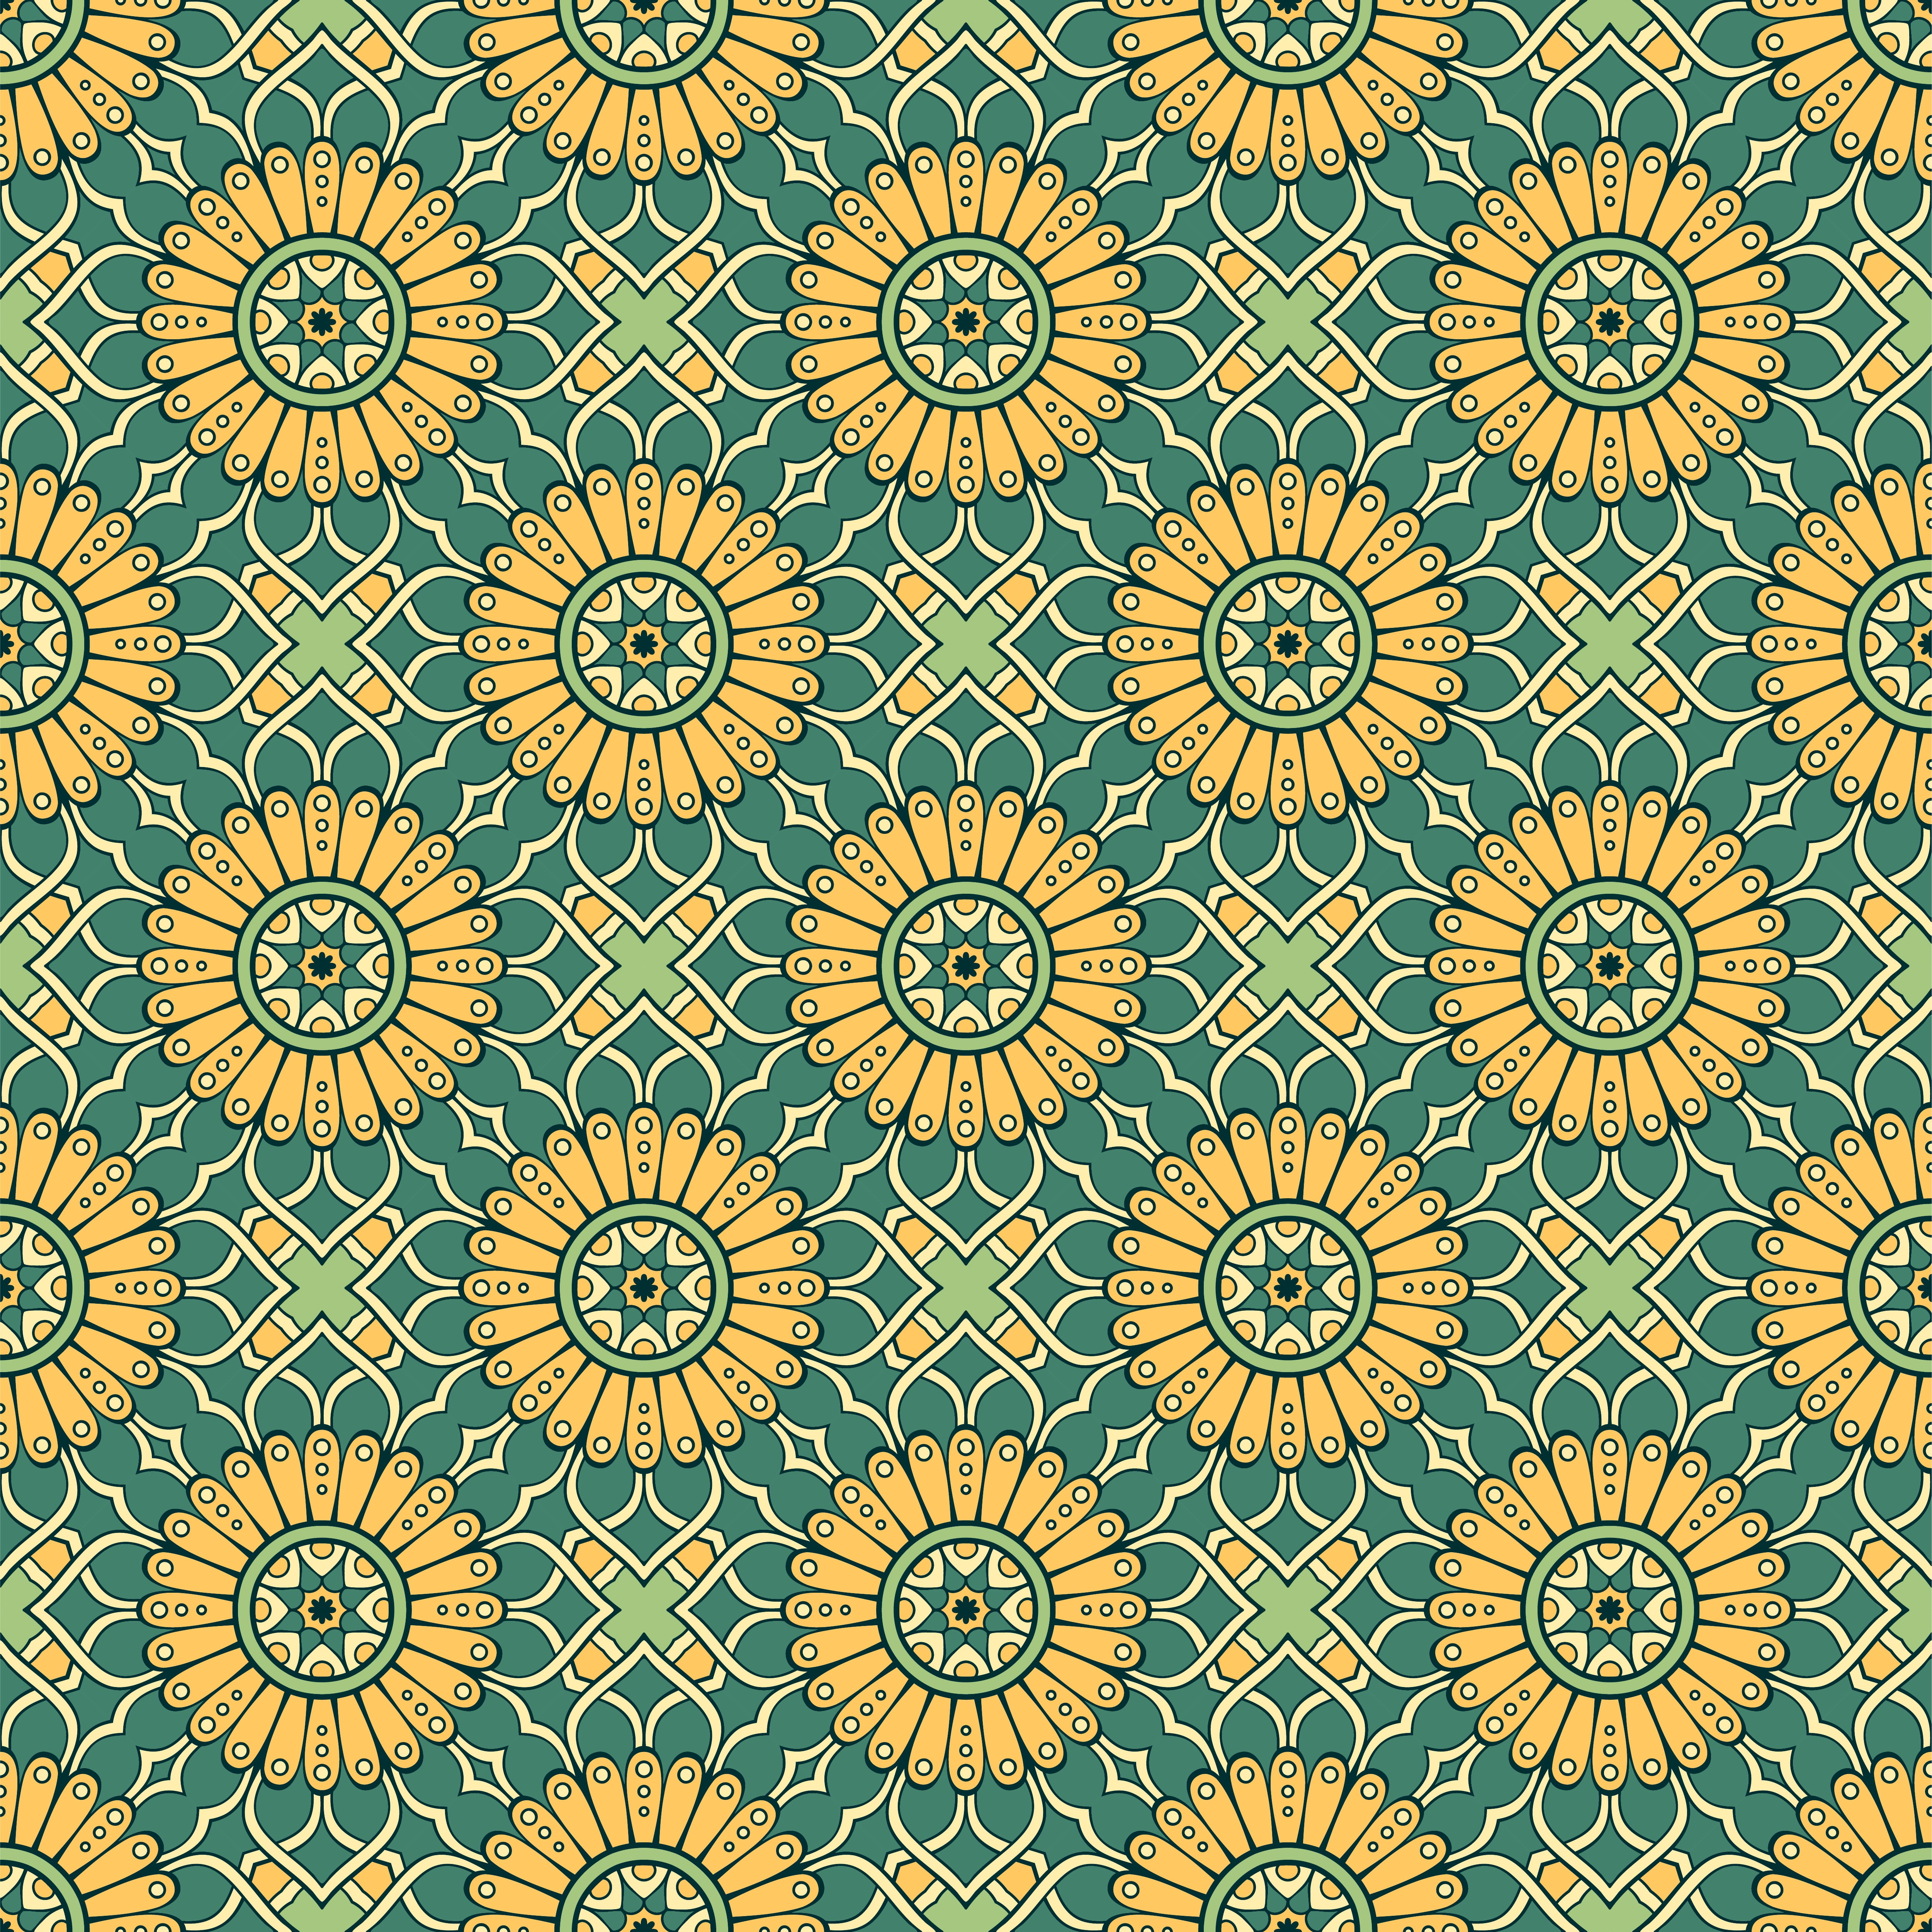 pattern, texture, backgrounds, floral pattern, full frame, design